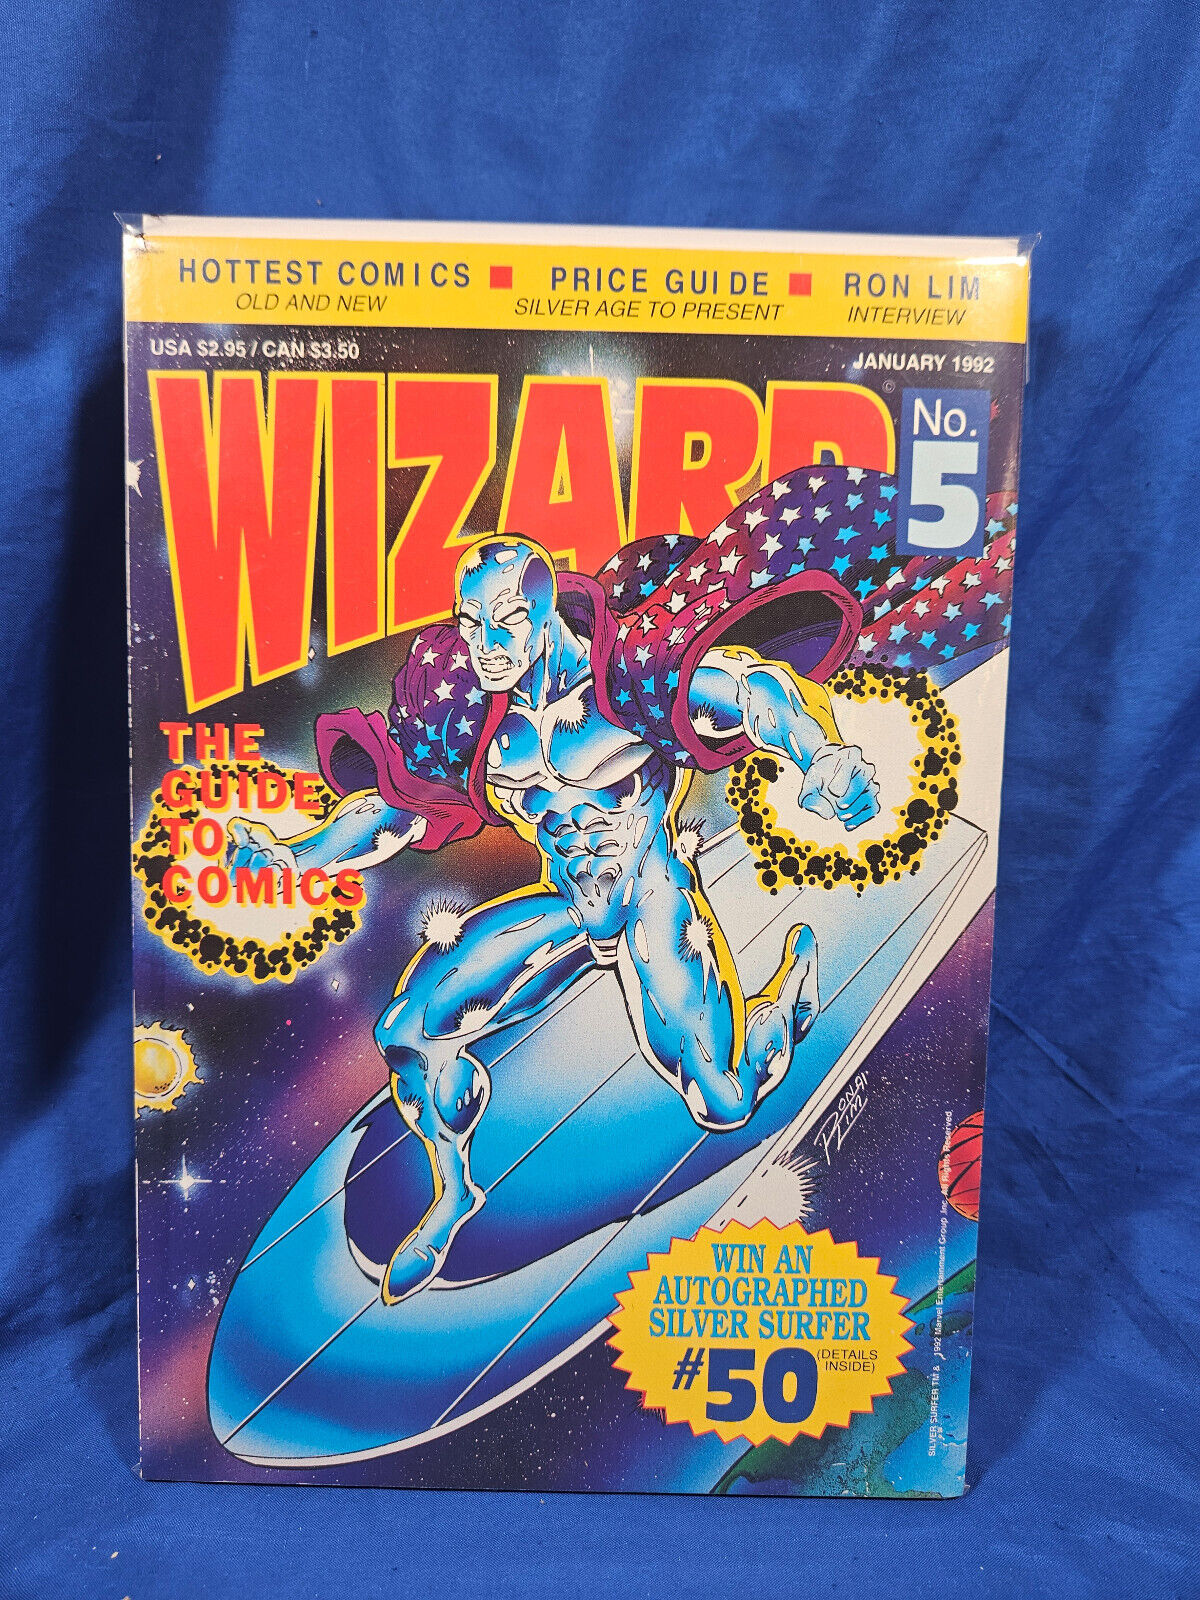 Wizard: The Comics Magazine #5 FN/VF 7.0 | Silver Surfer Ron Lim